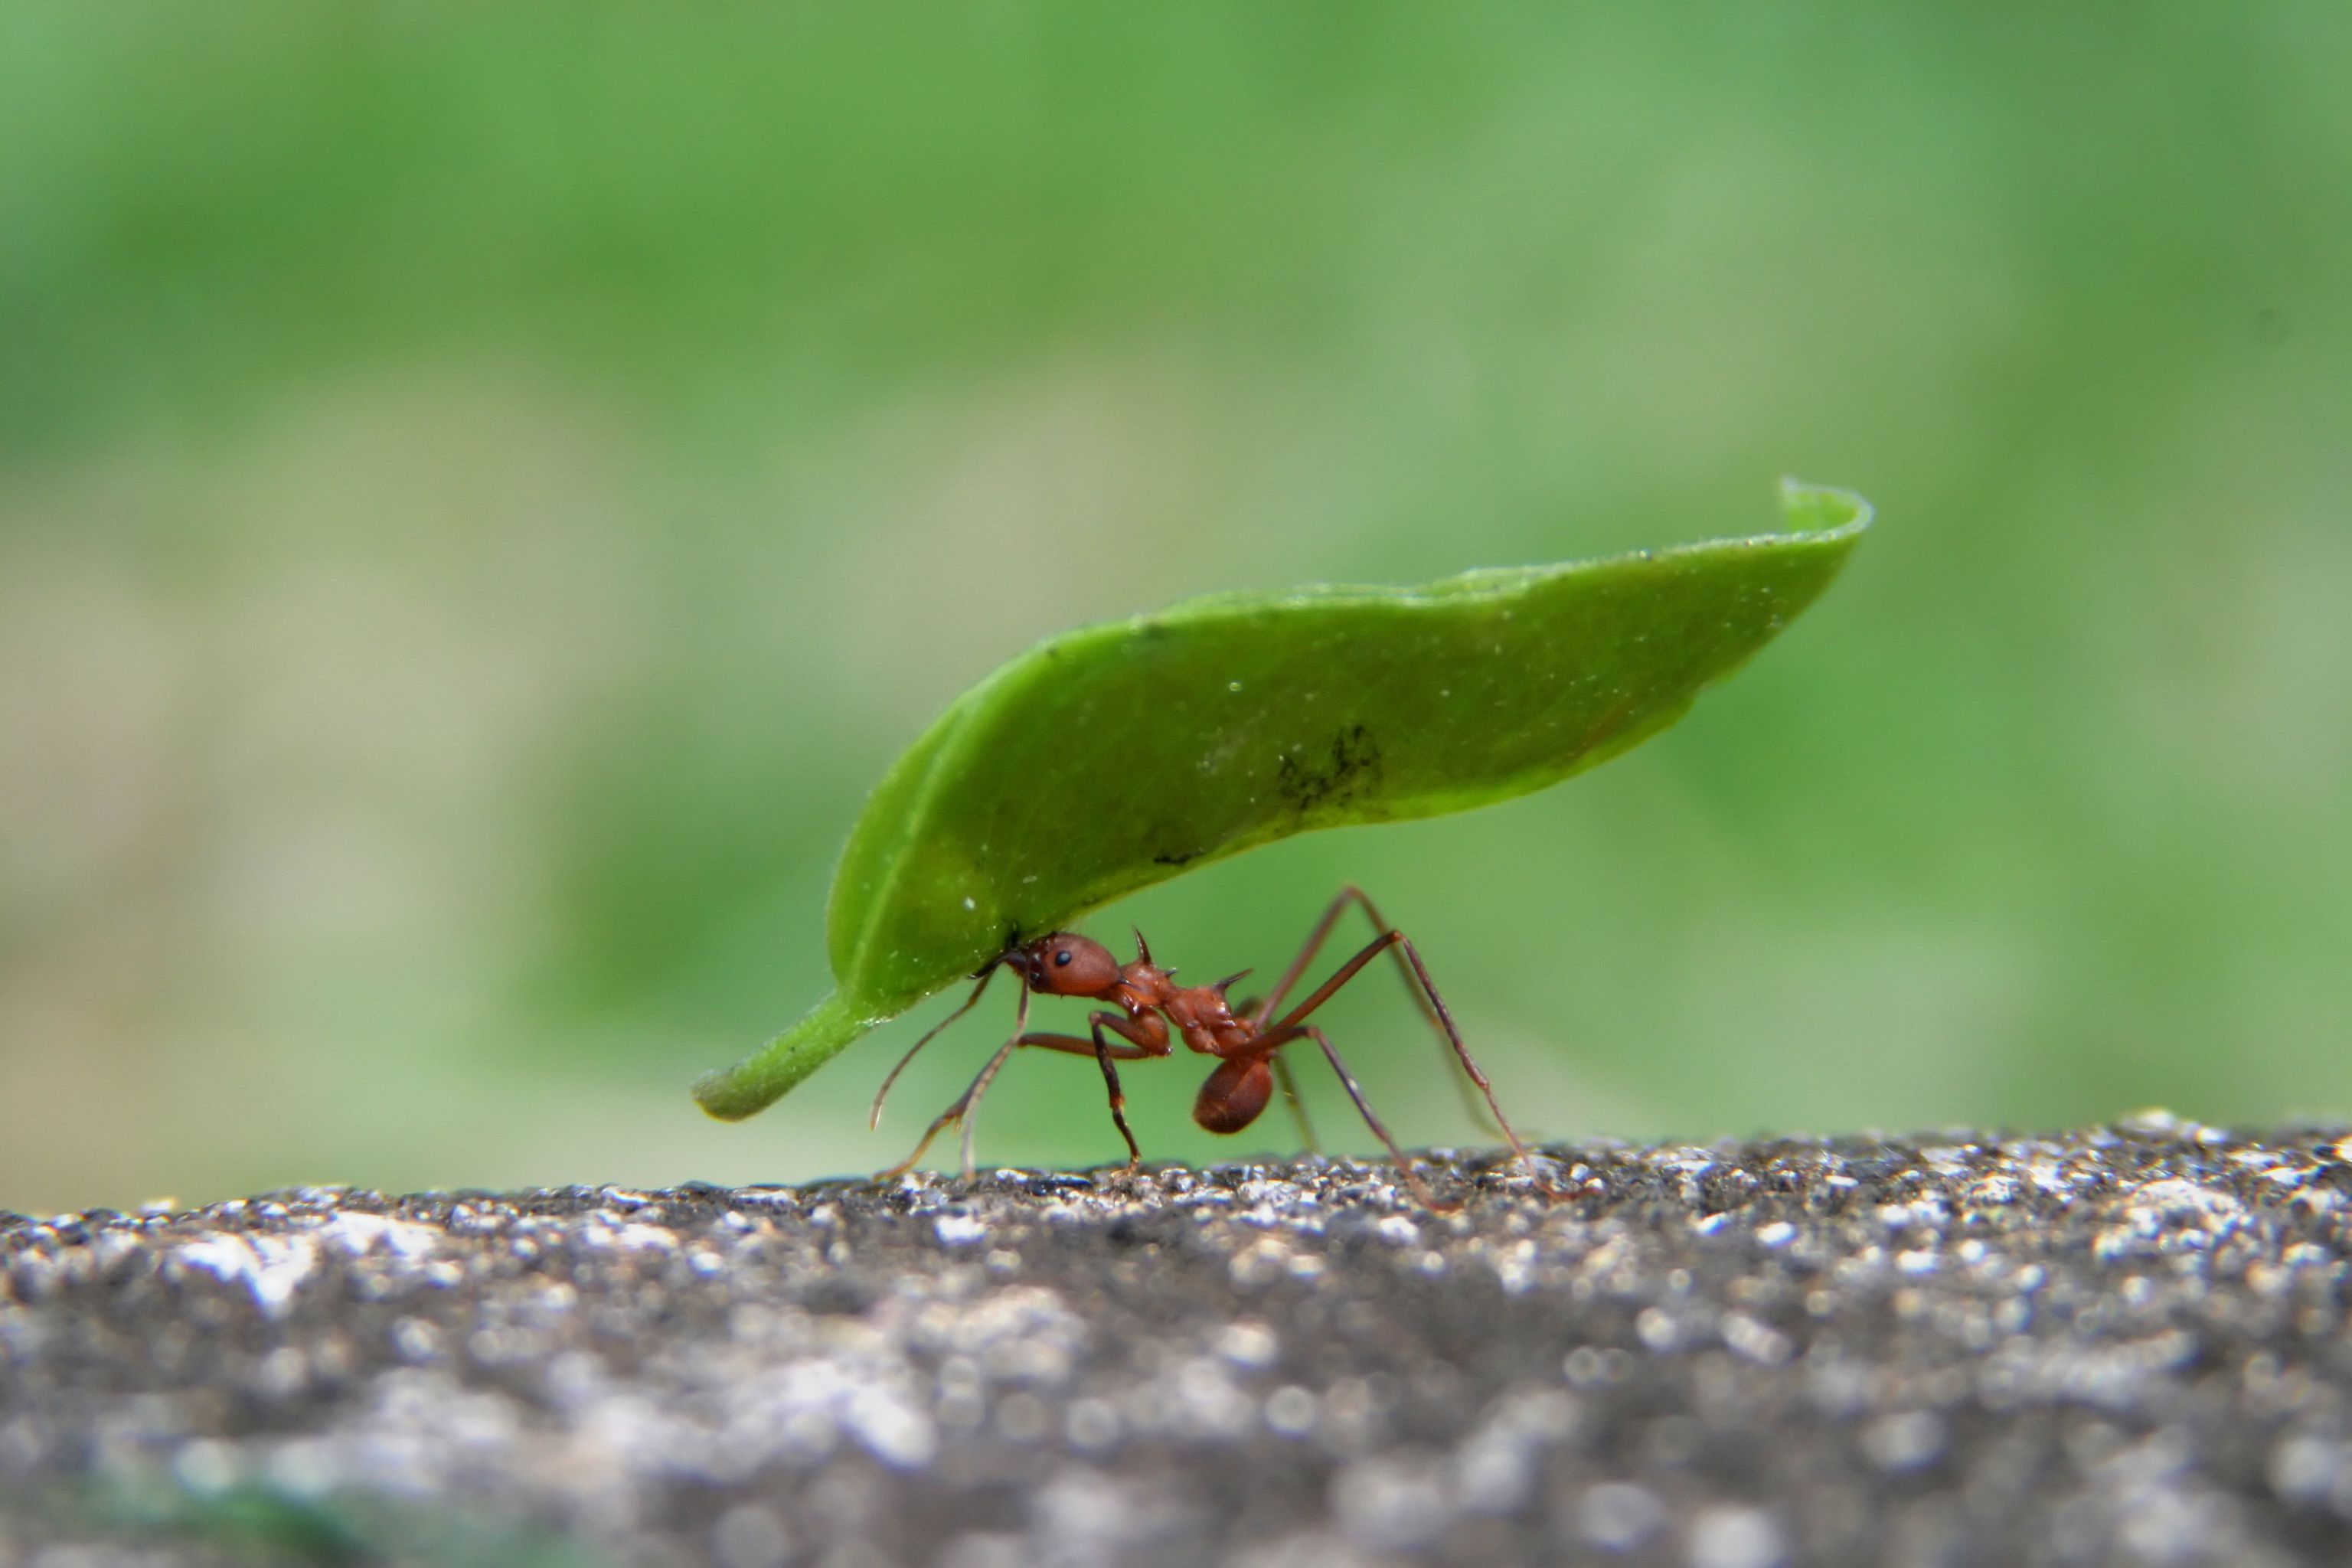 https://hips.hearstapps.com/hmg-prod/images/how-to-get-rid-of-ants-1525890306.jpg